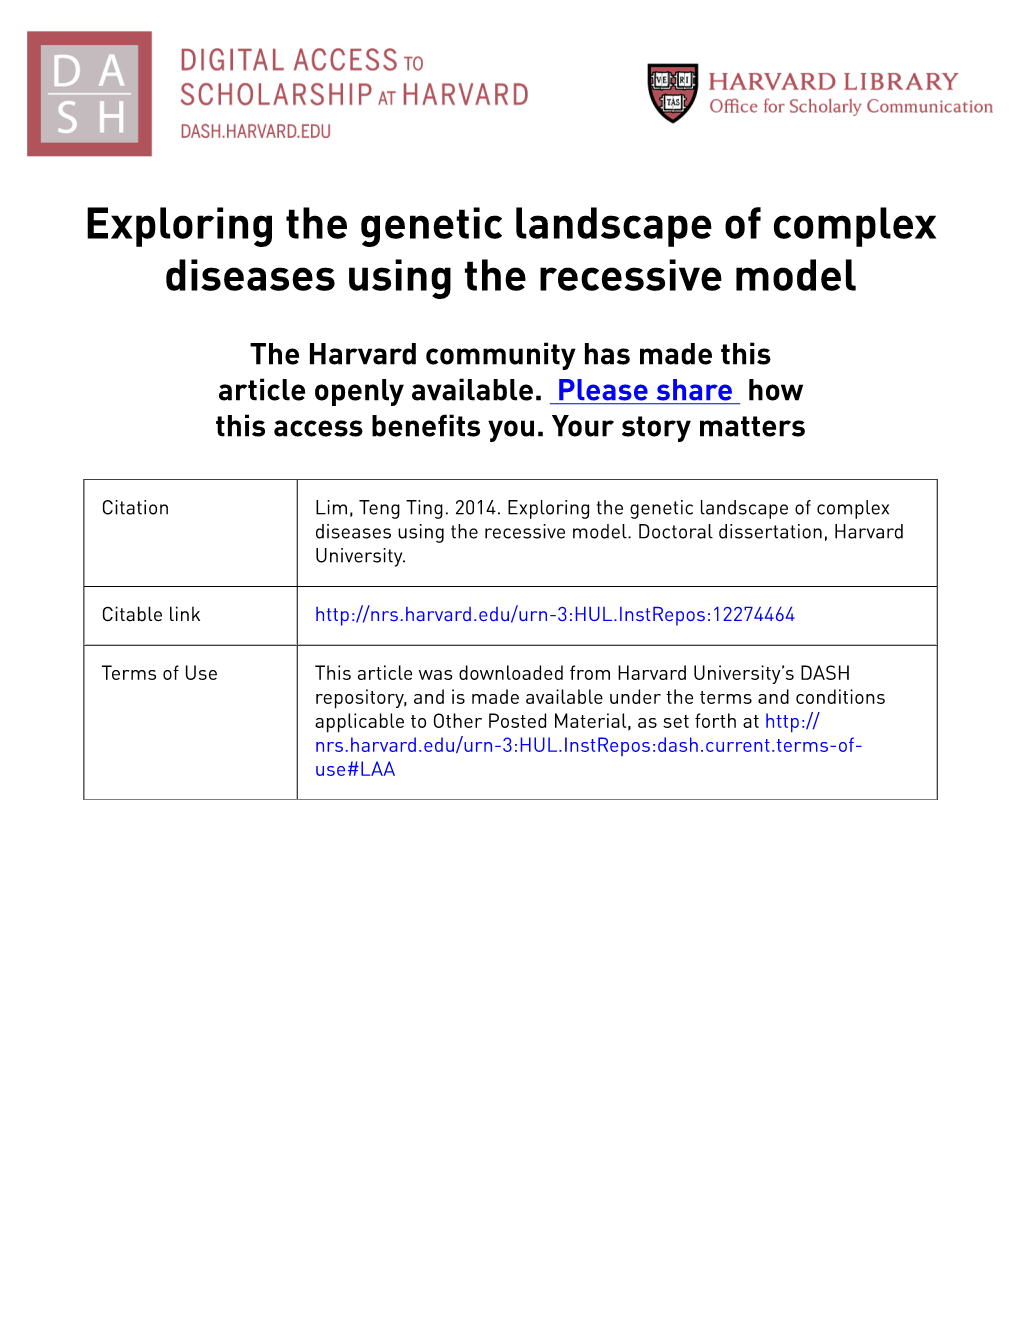 Exploring the Genetic Landscape of Complex Diseases Using the Recessive Model